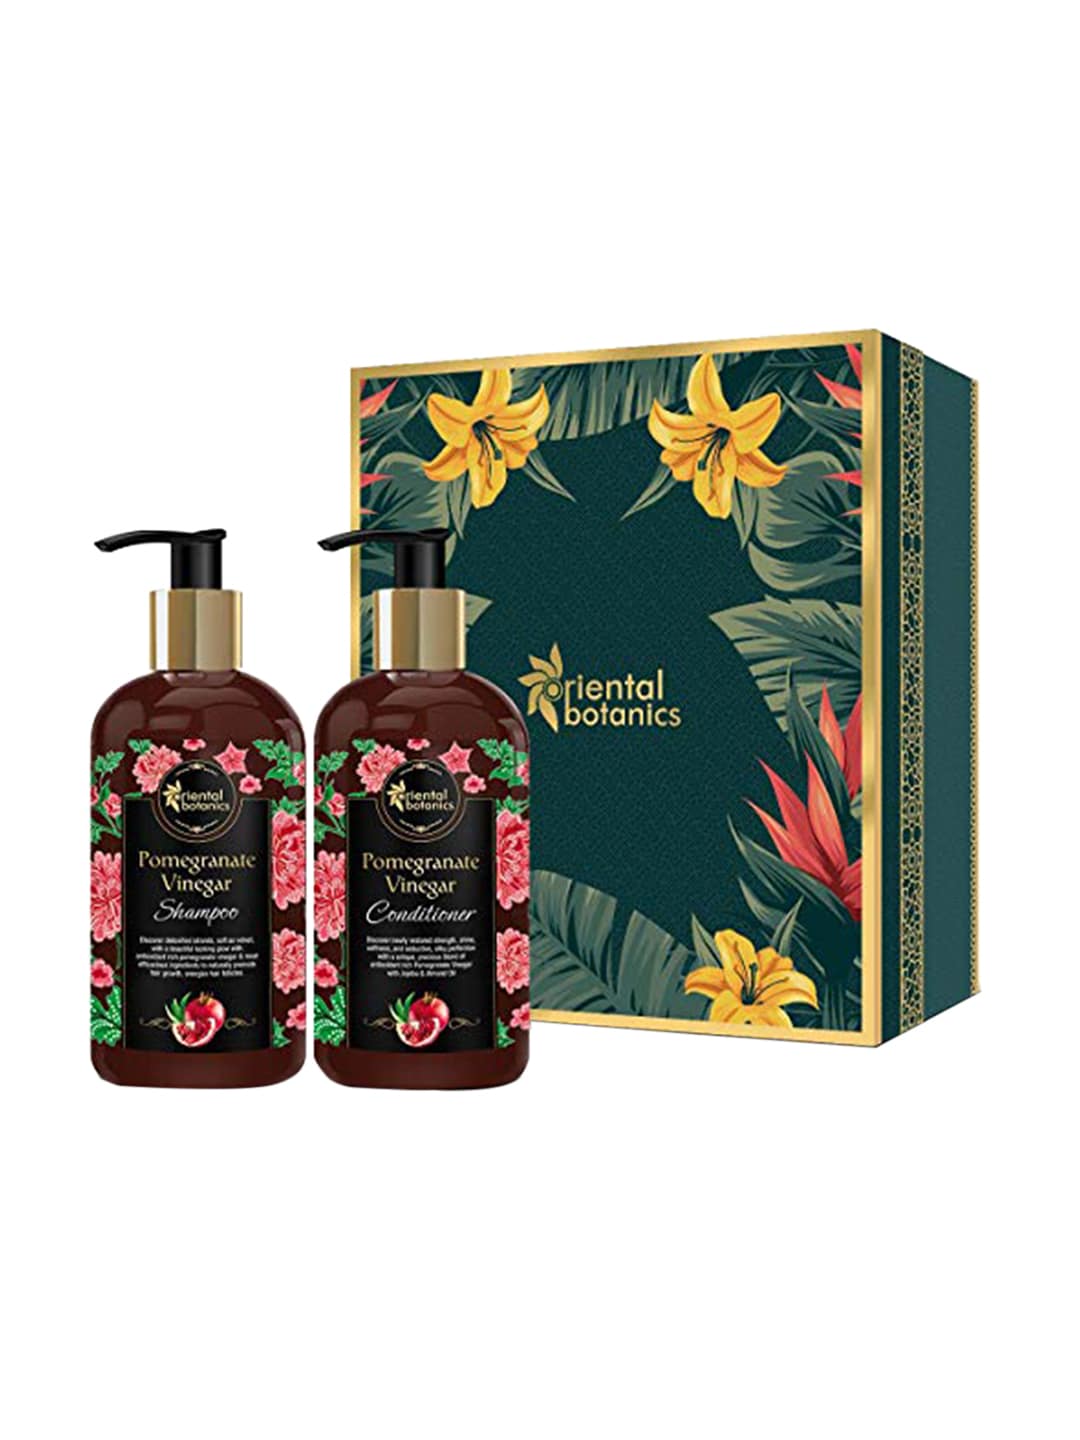 Oriental Botanics Pomegranate Vinegar Shampoo & Conditioner 300ml each Price in India